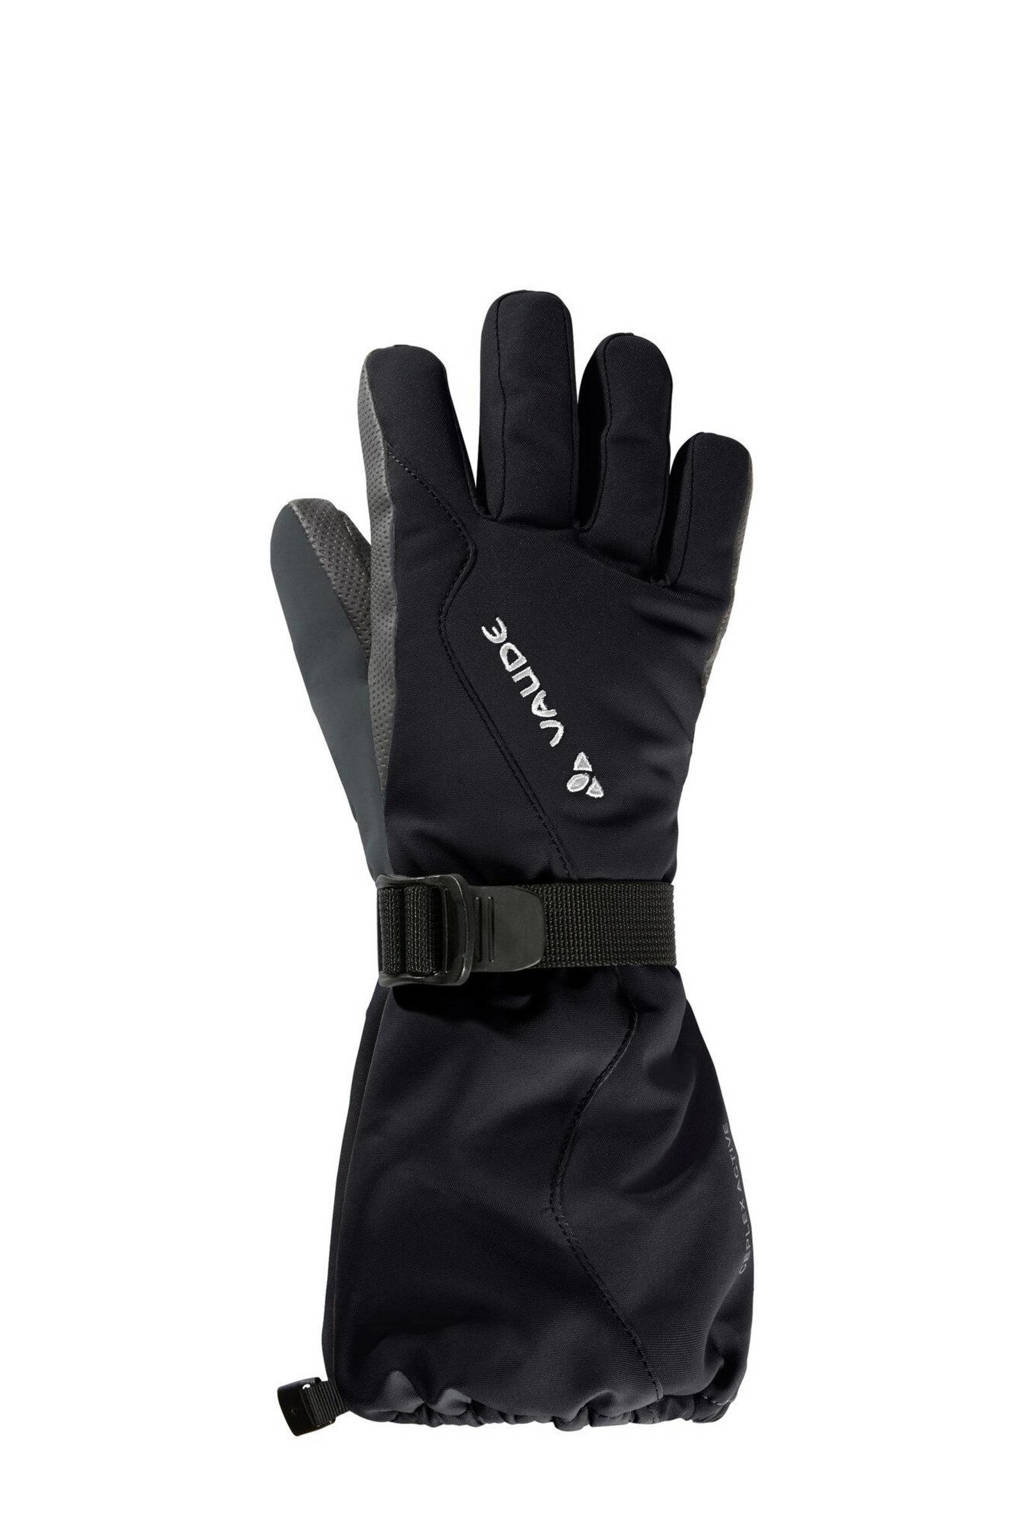 skihandschoenen Snow Cup Gloves zwart